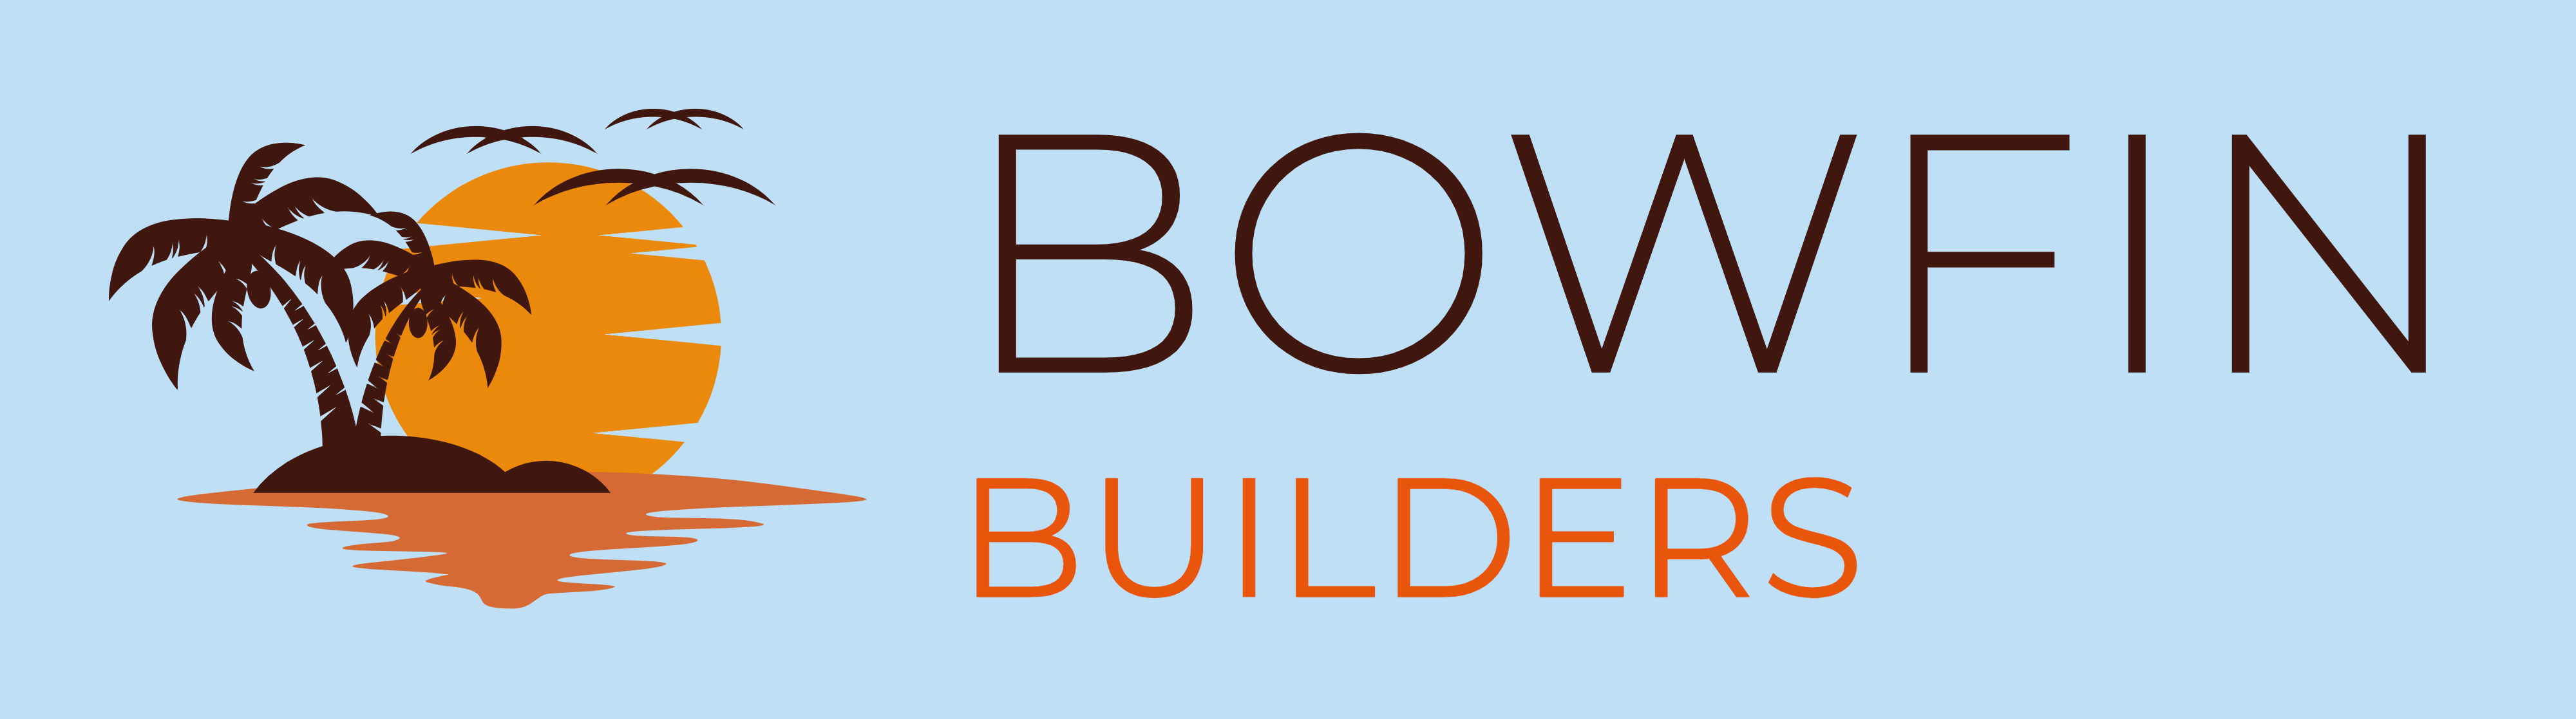 Bowfin Builders Logo